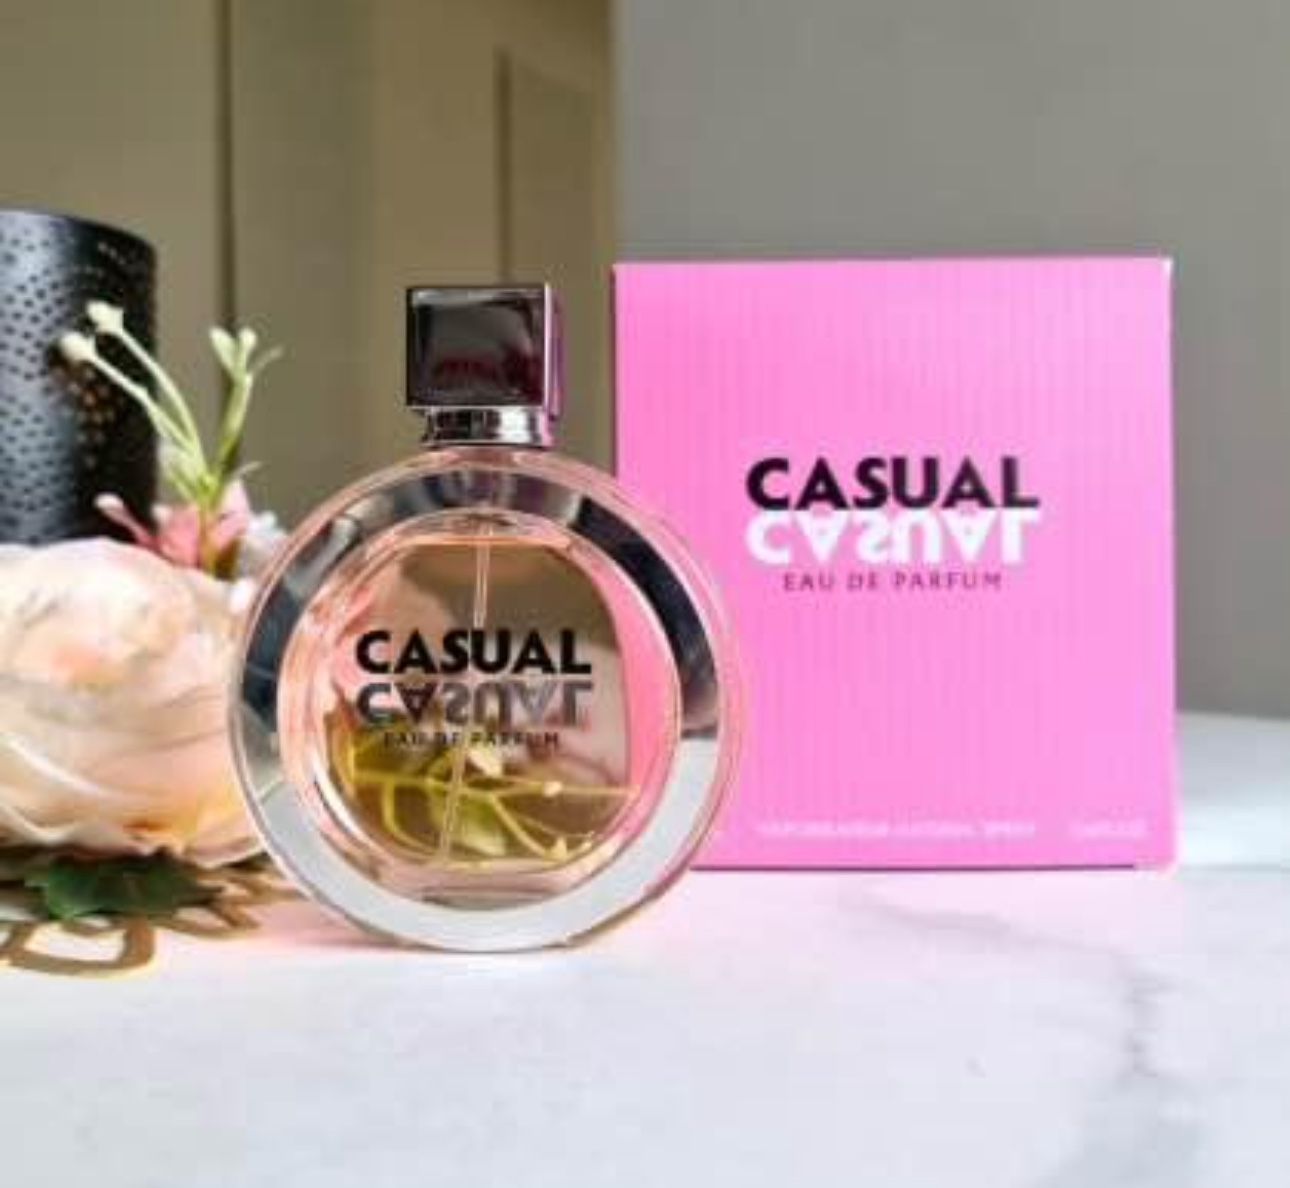 Casual perfume